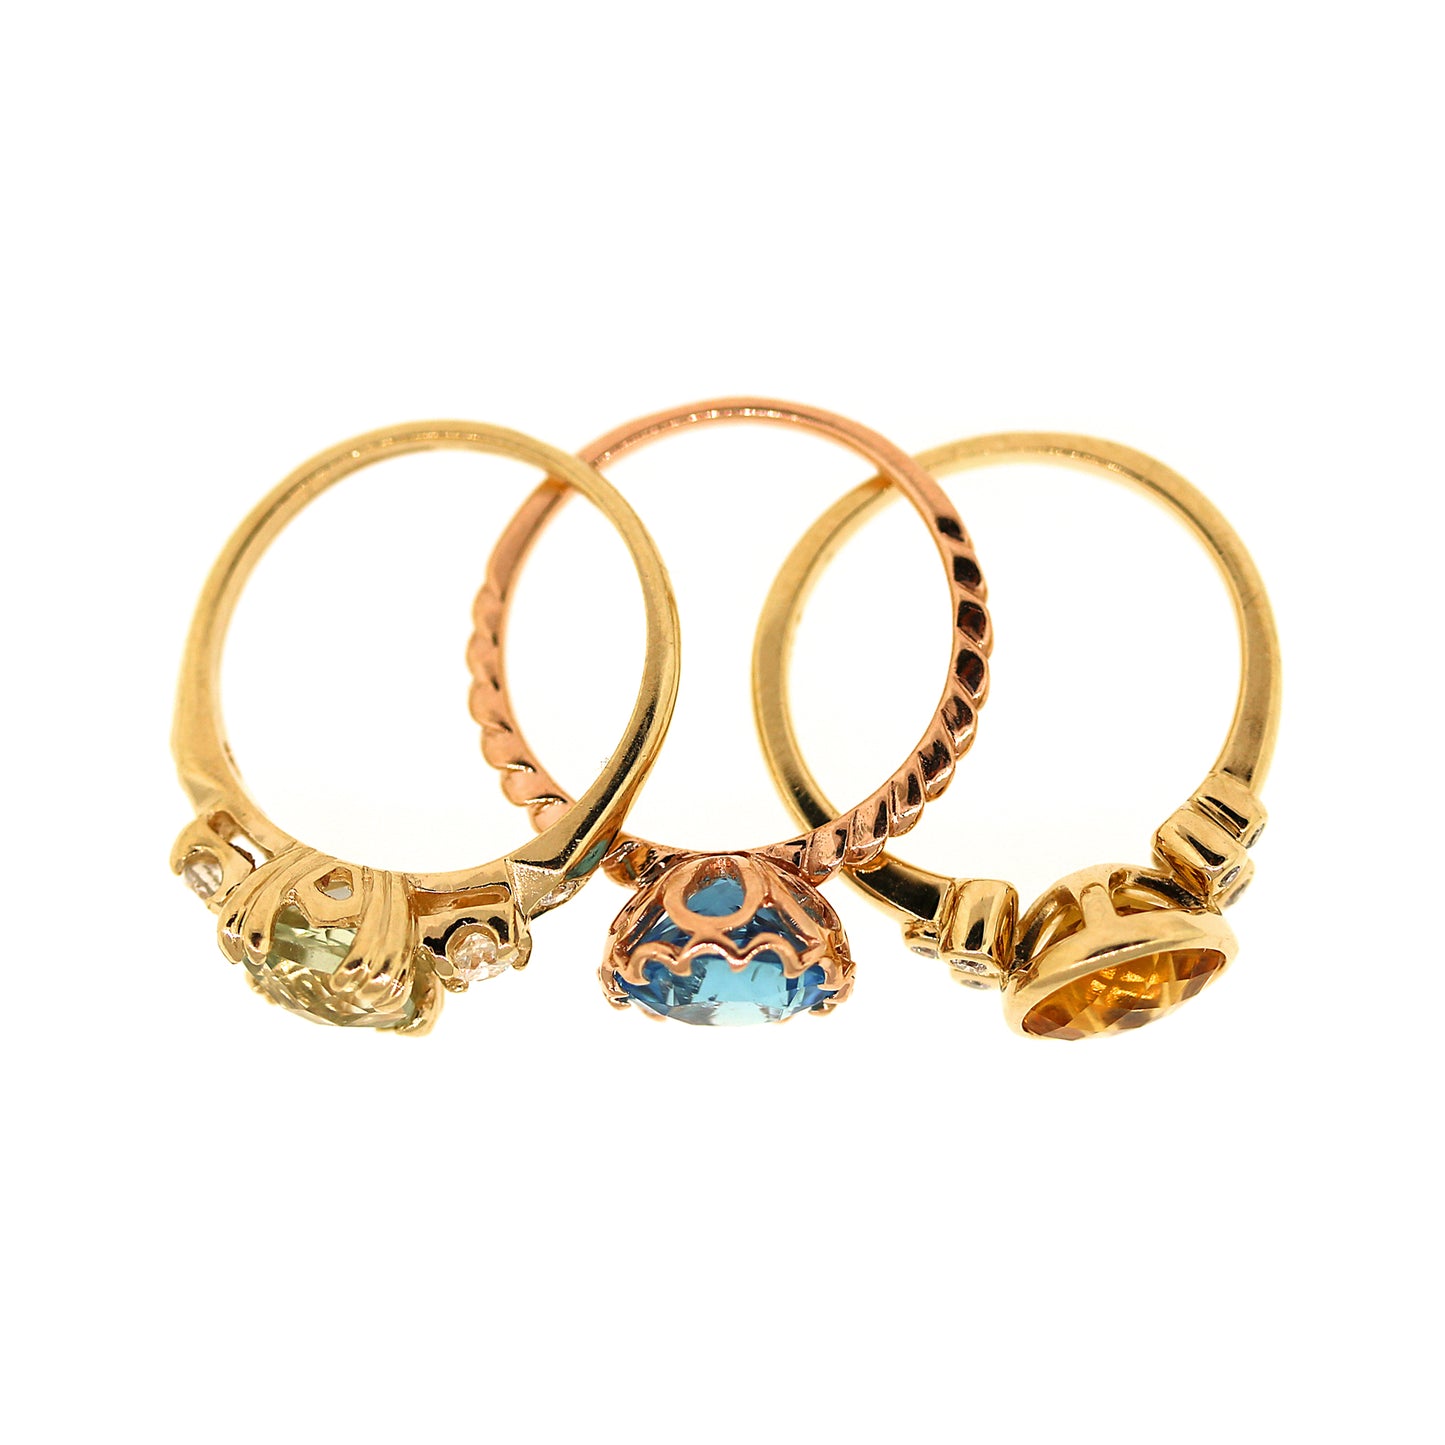 3-Color Topaz Ring Set in 14k Gold